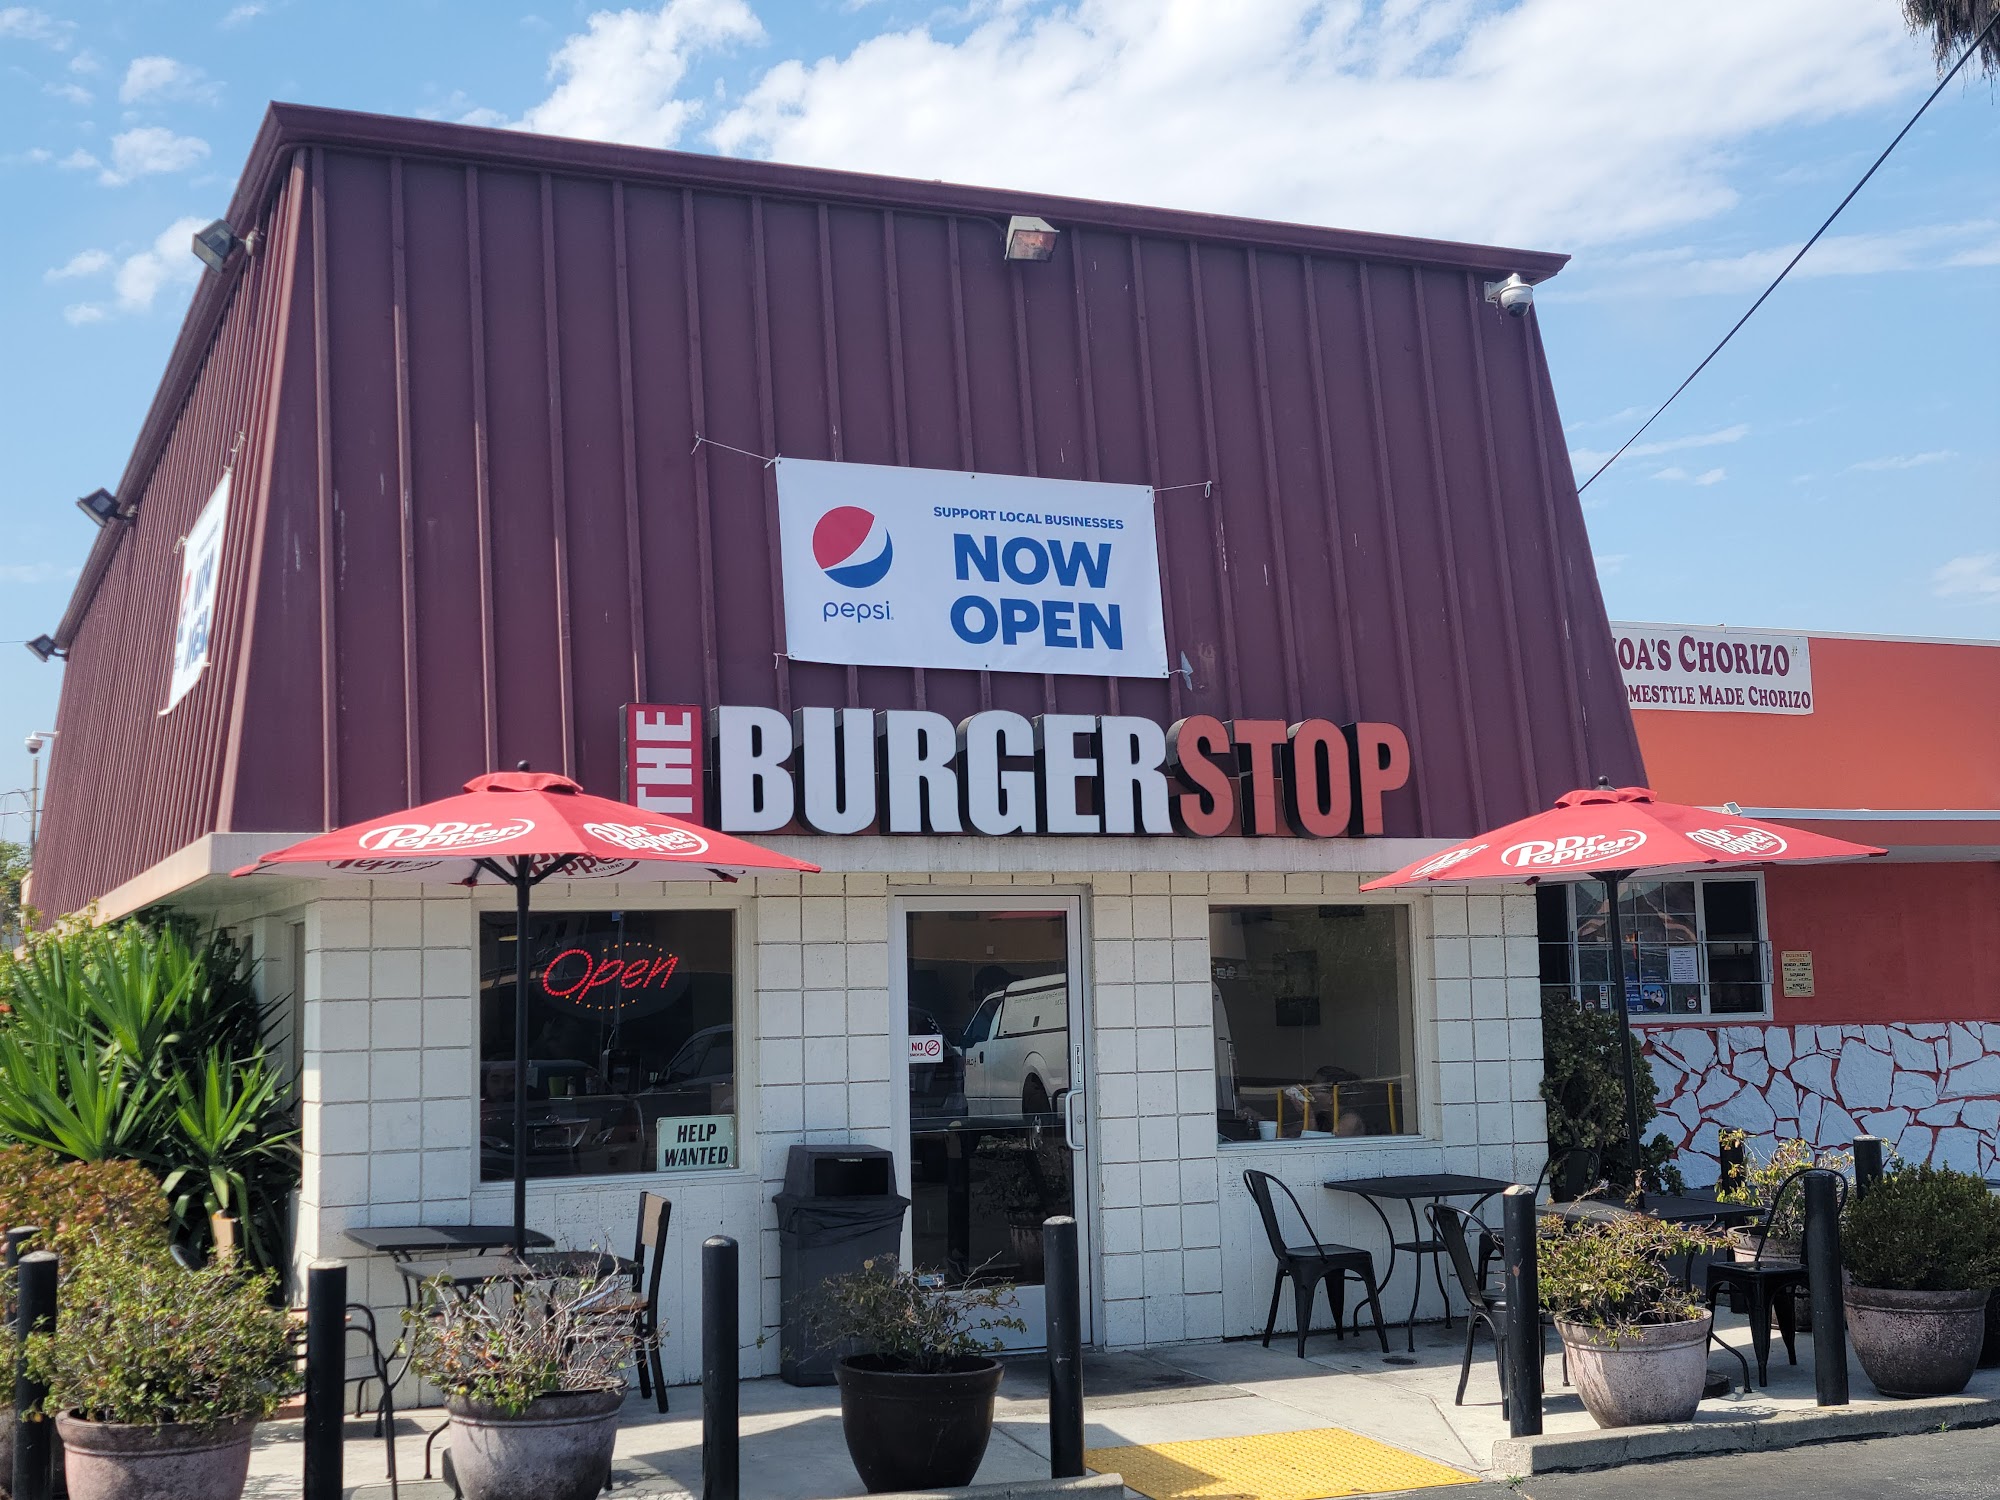 The Burger Stop